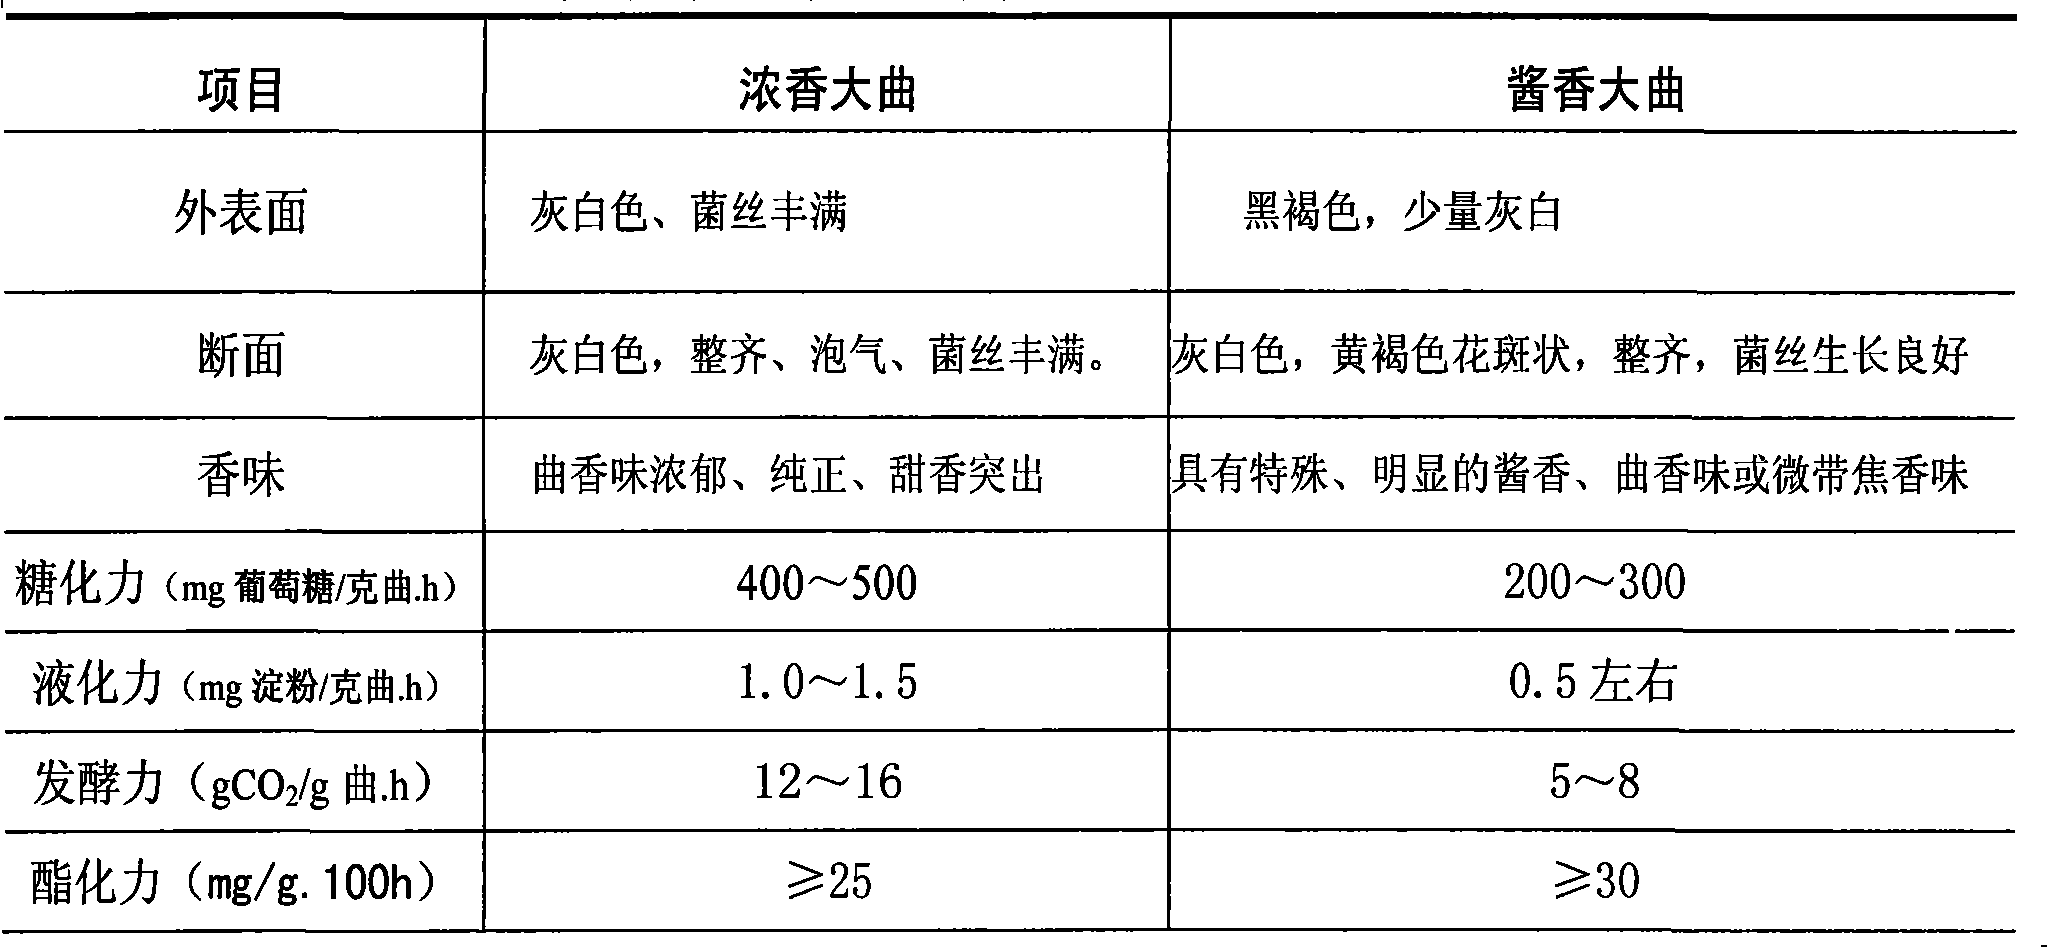 Production method of Maotai-flavor liquor